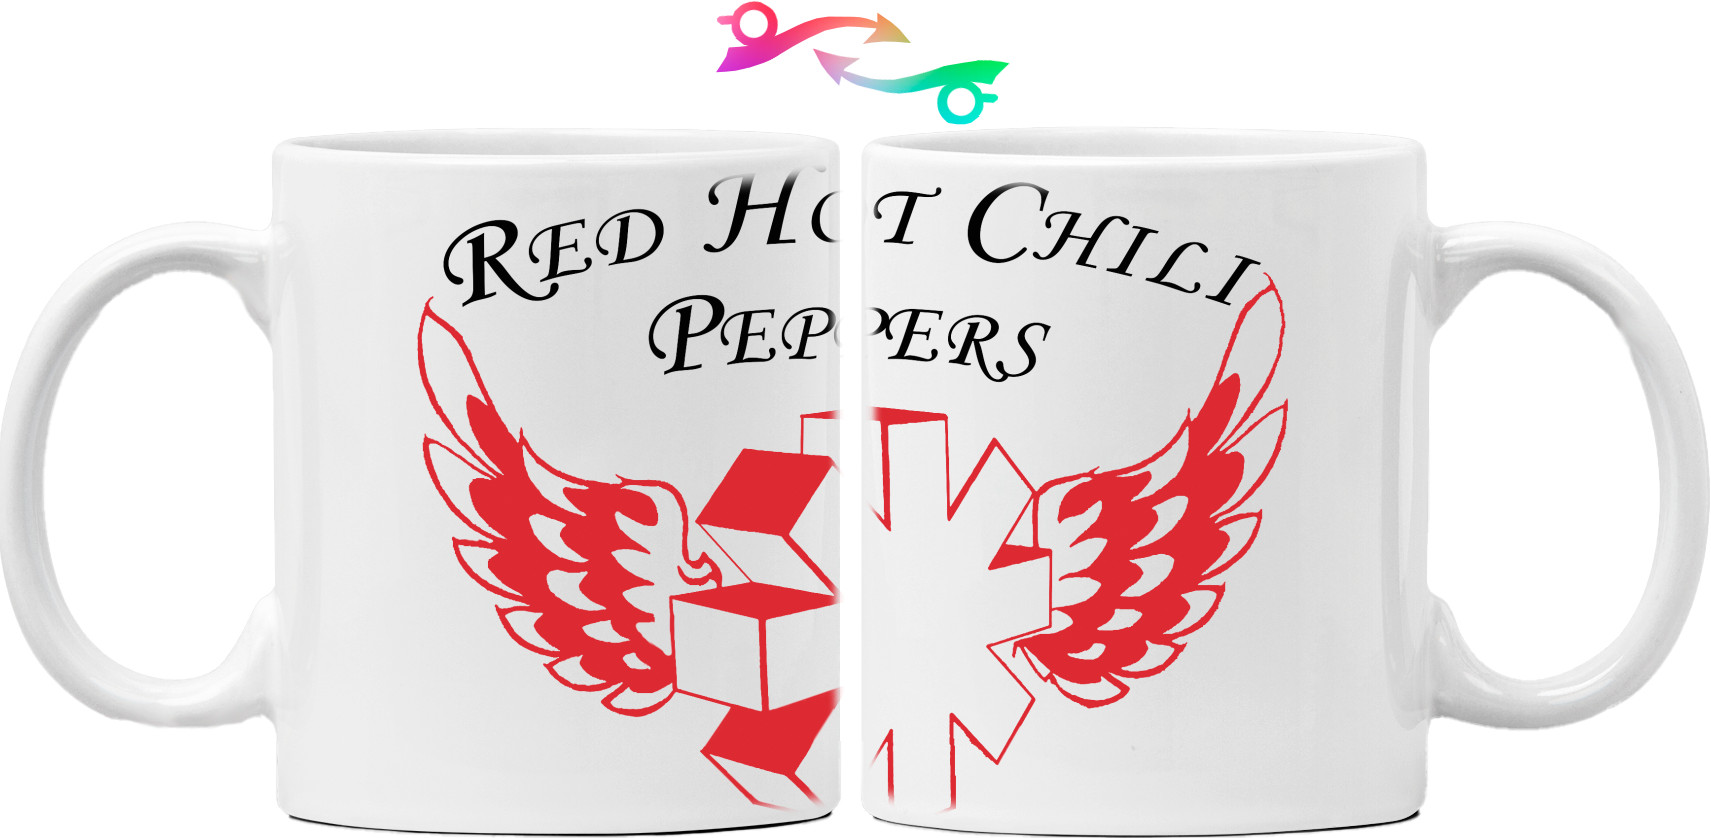 Red Hot Chili Peppers 2 печать